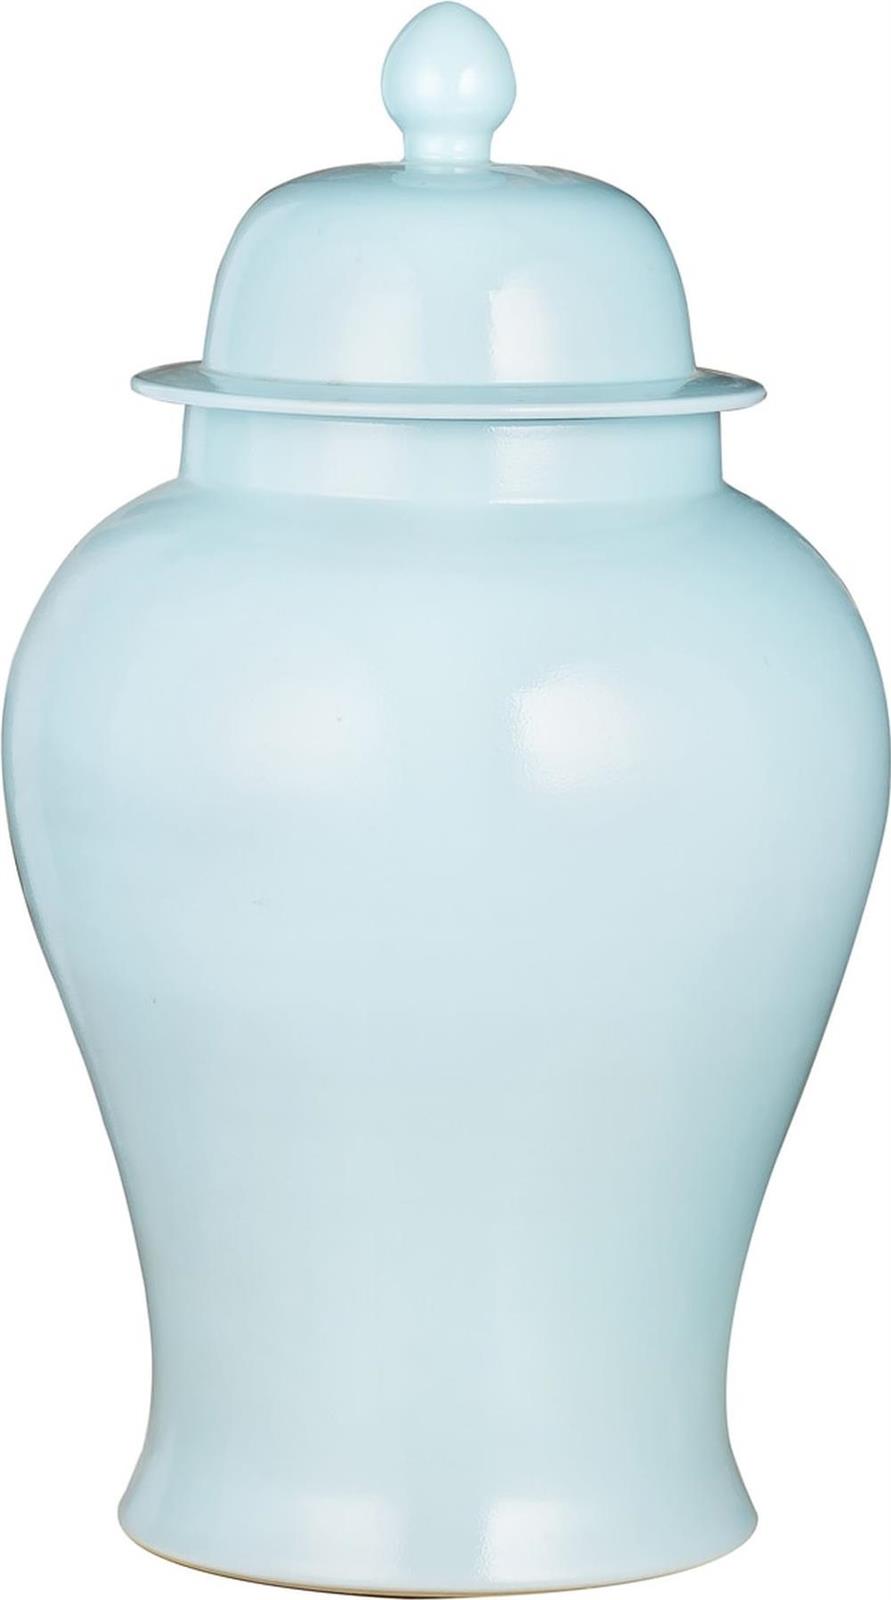 Temple Jar Vase Large Icy Blue Ceramic-Image 1